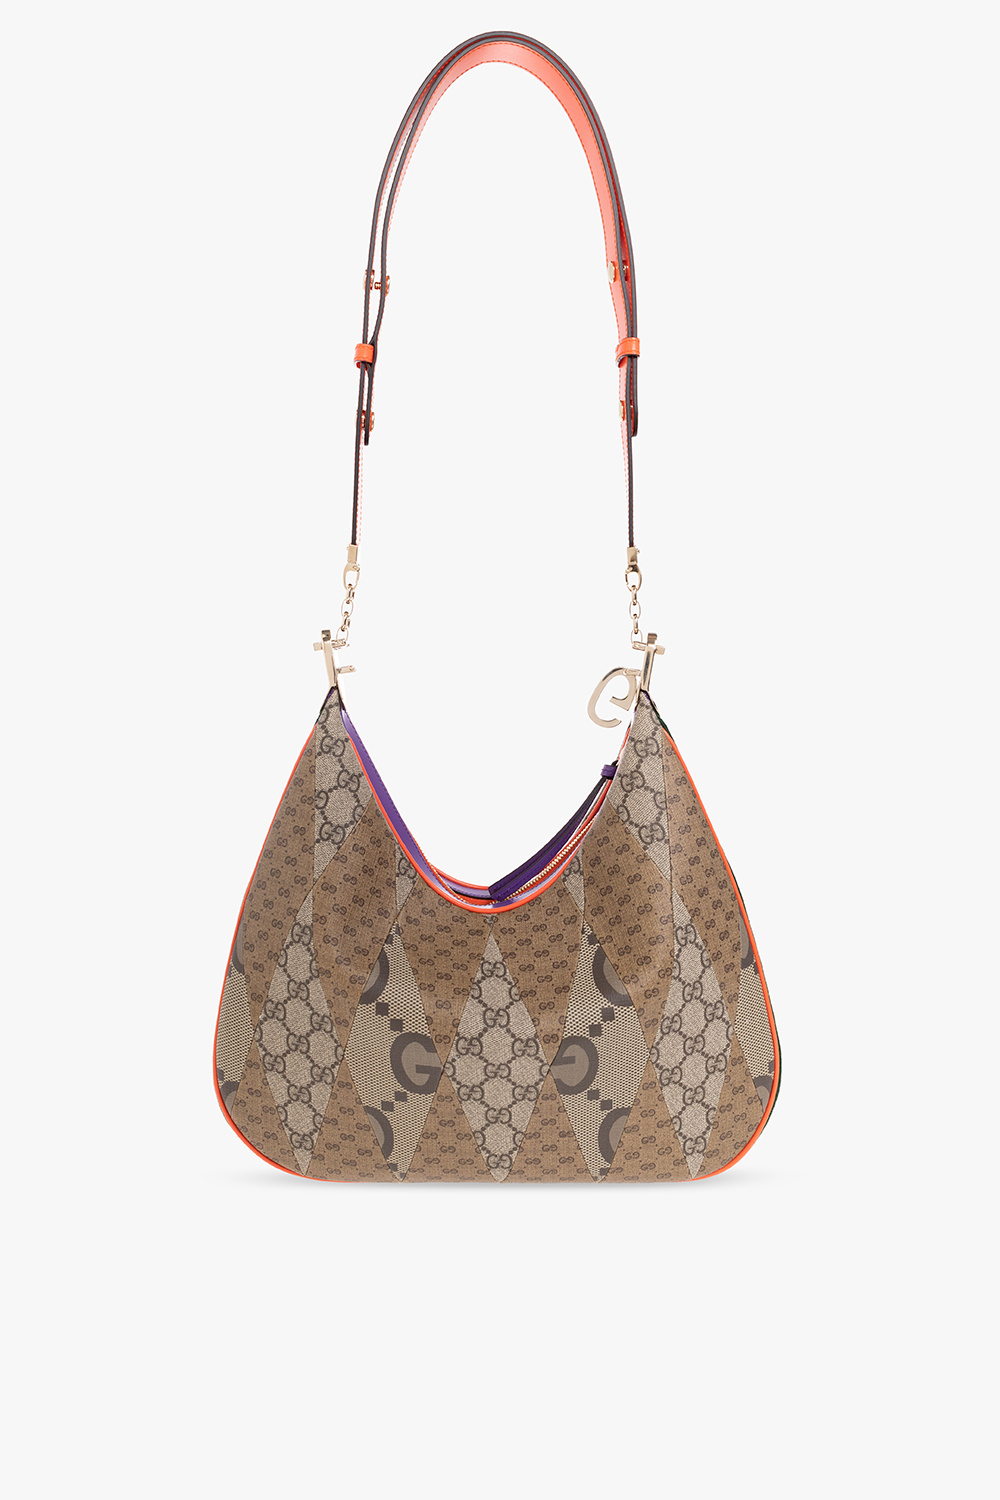 Gucci Attache Large Coated-Canvas Shoulder Bag